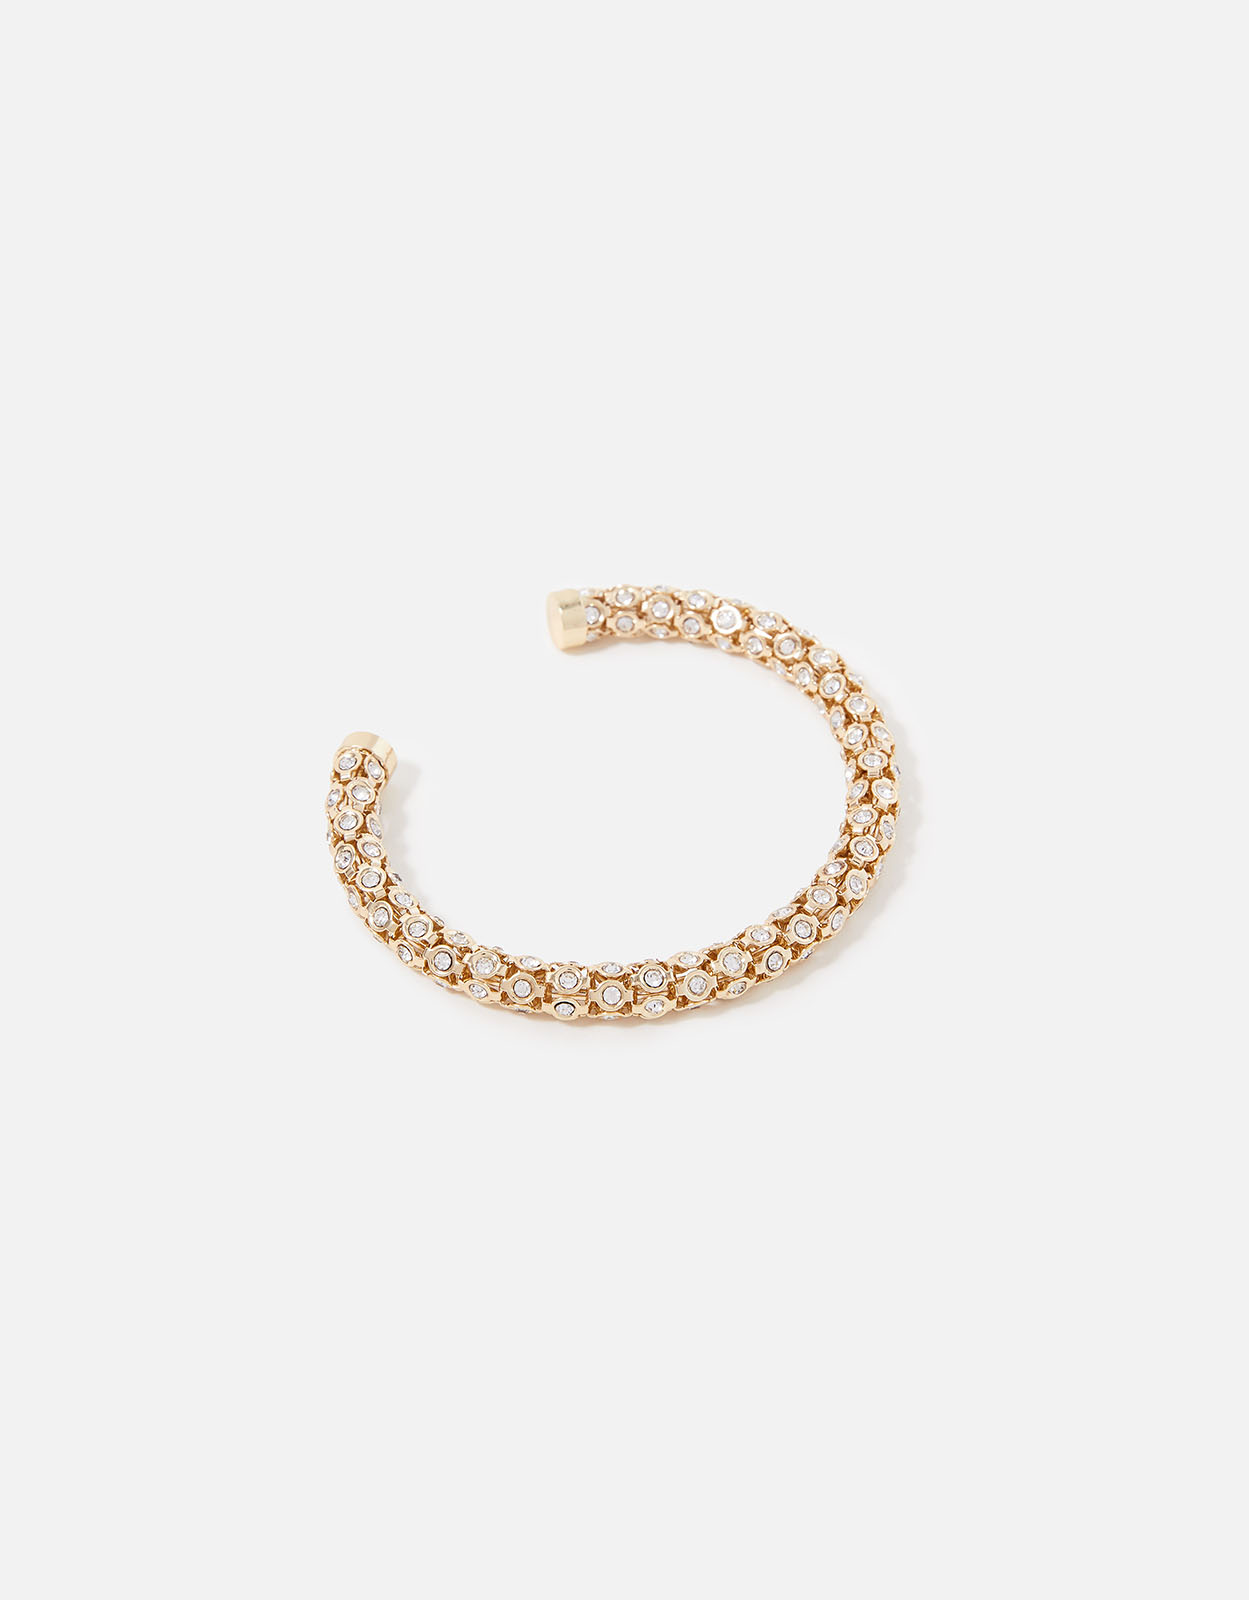 Accessorize Women's Gold Crystal Cuff Bracelet, Size: One Size